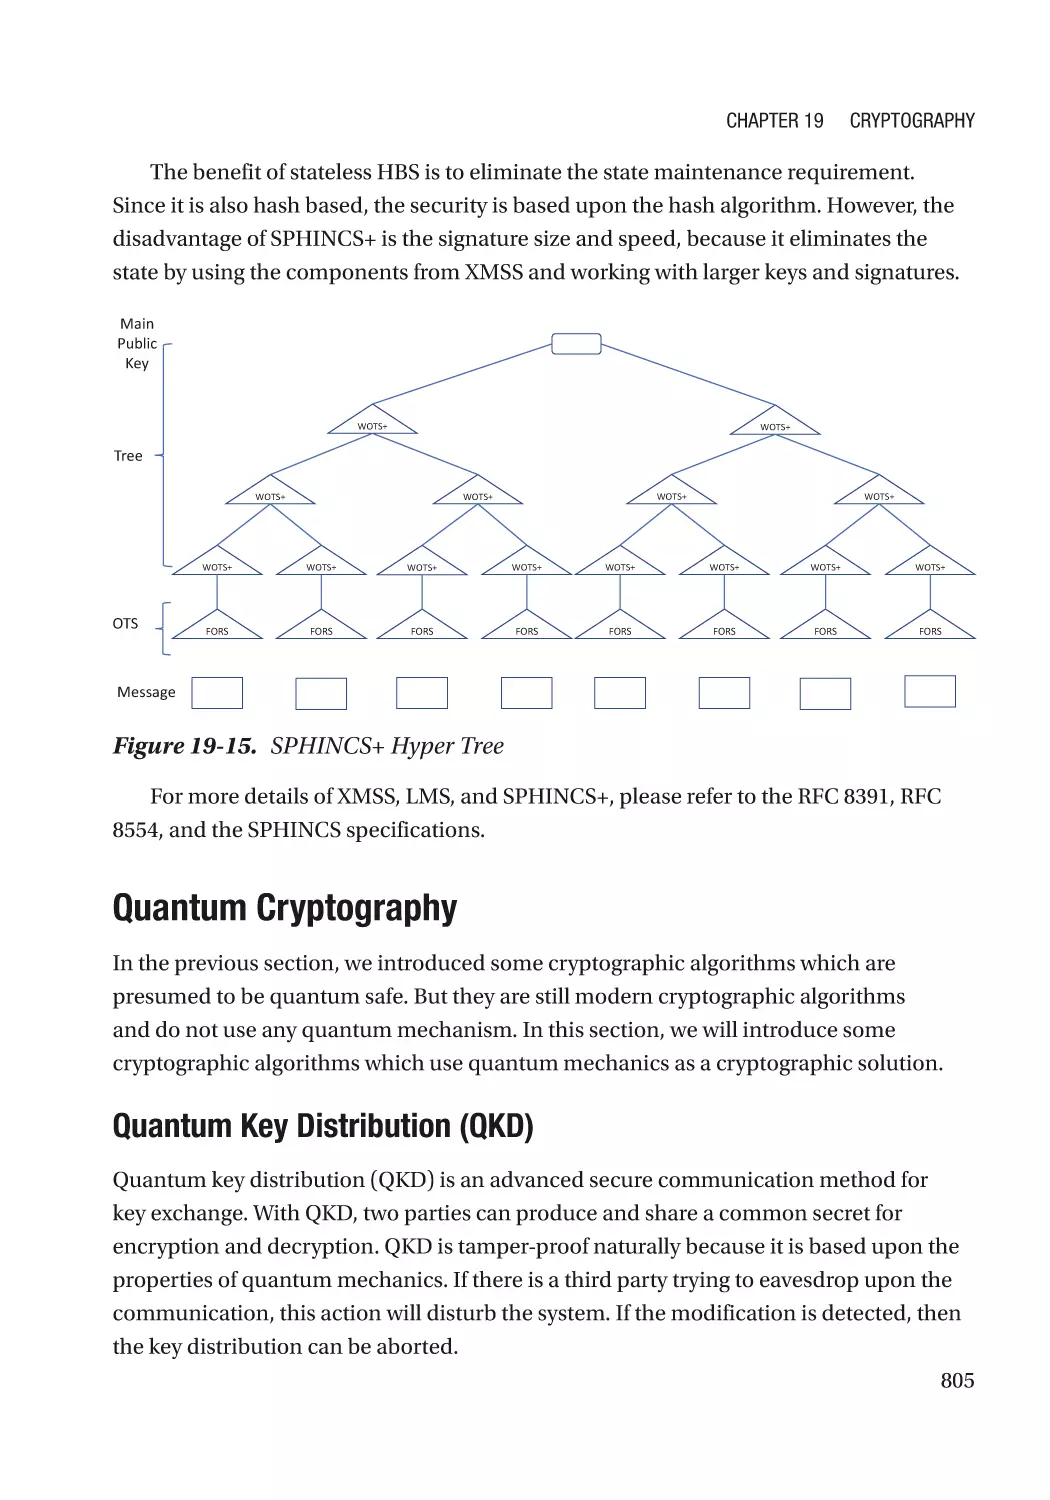 Quantum Cryptography
Quantum Key Distribution (QKD)